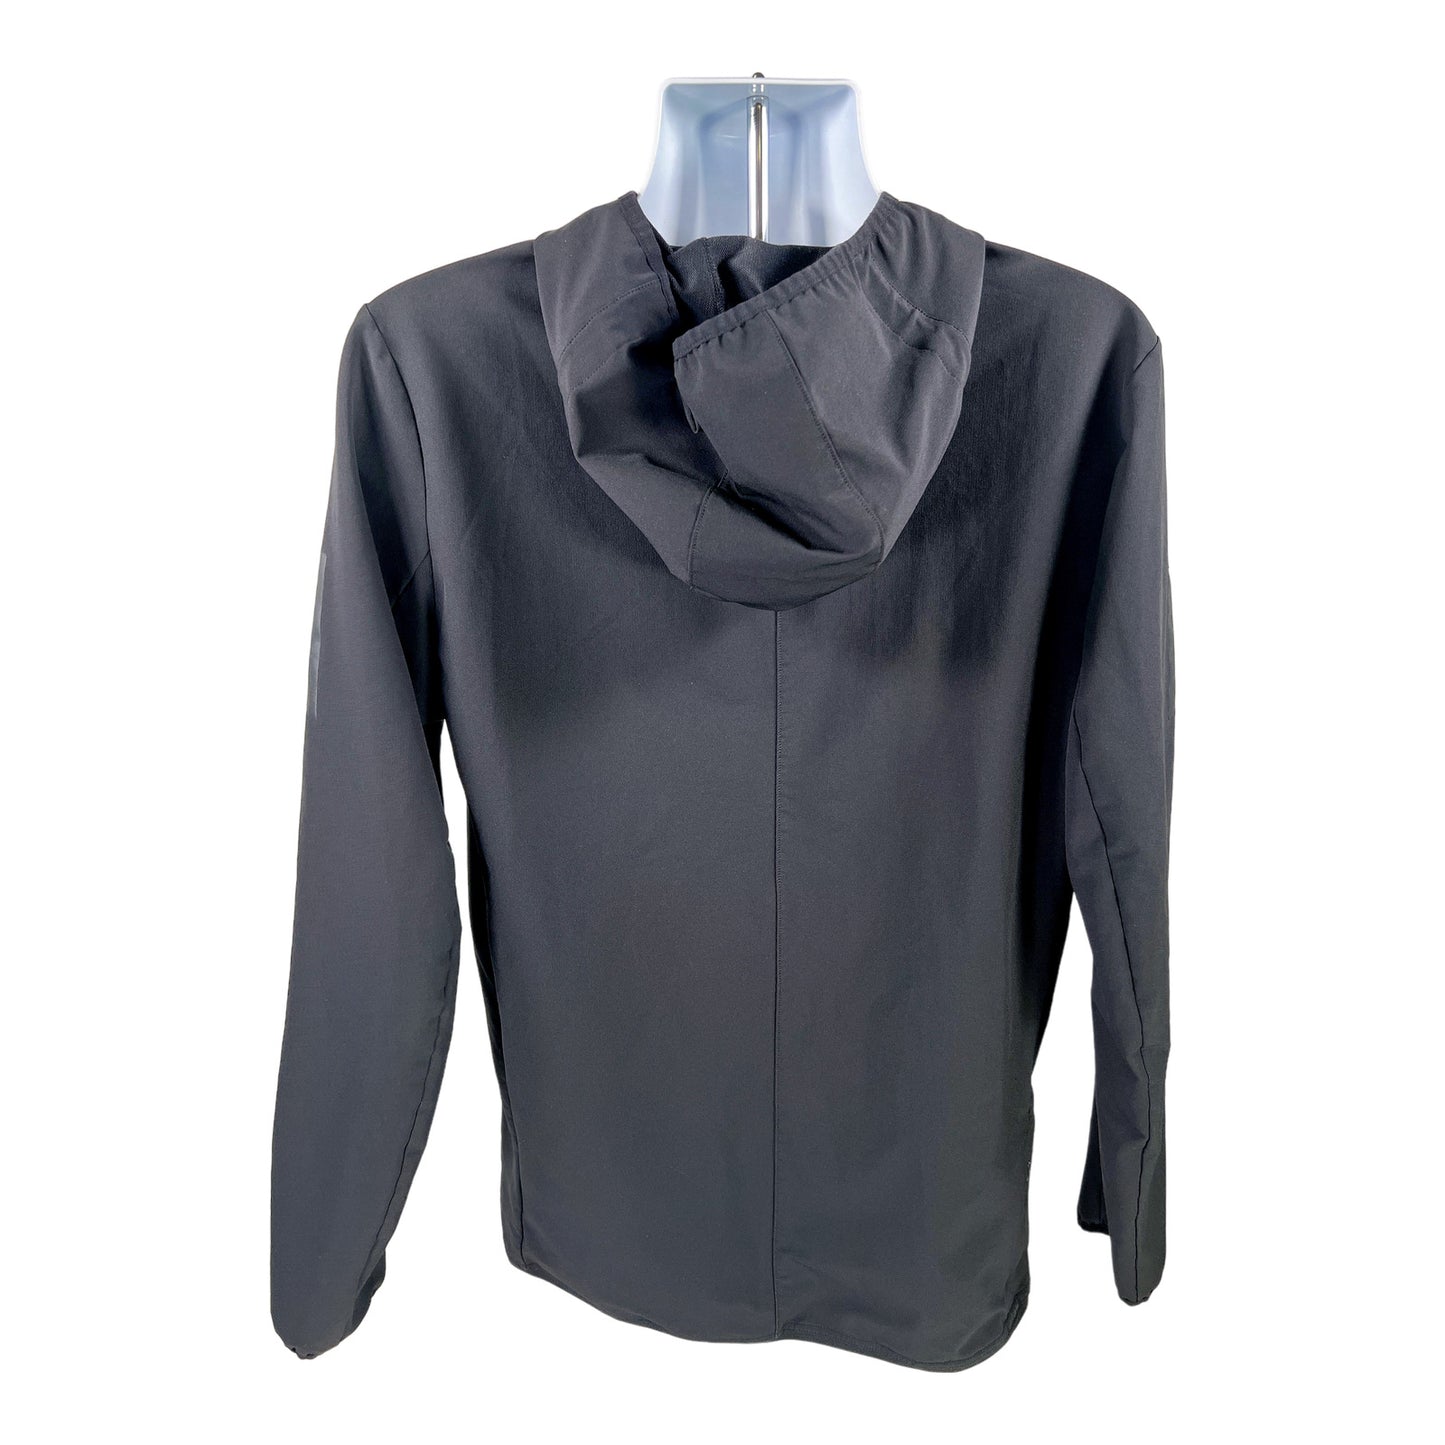 Adidas Men’s Black Long Sleeve Full Zip Running Windbreaker Jacket - M